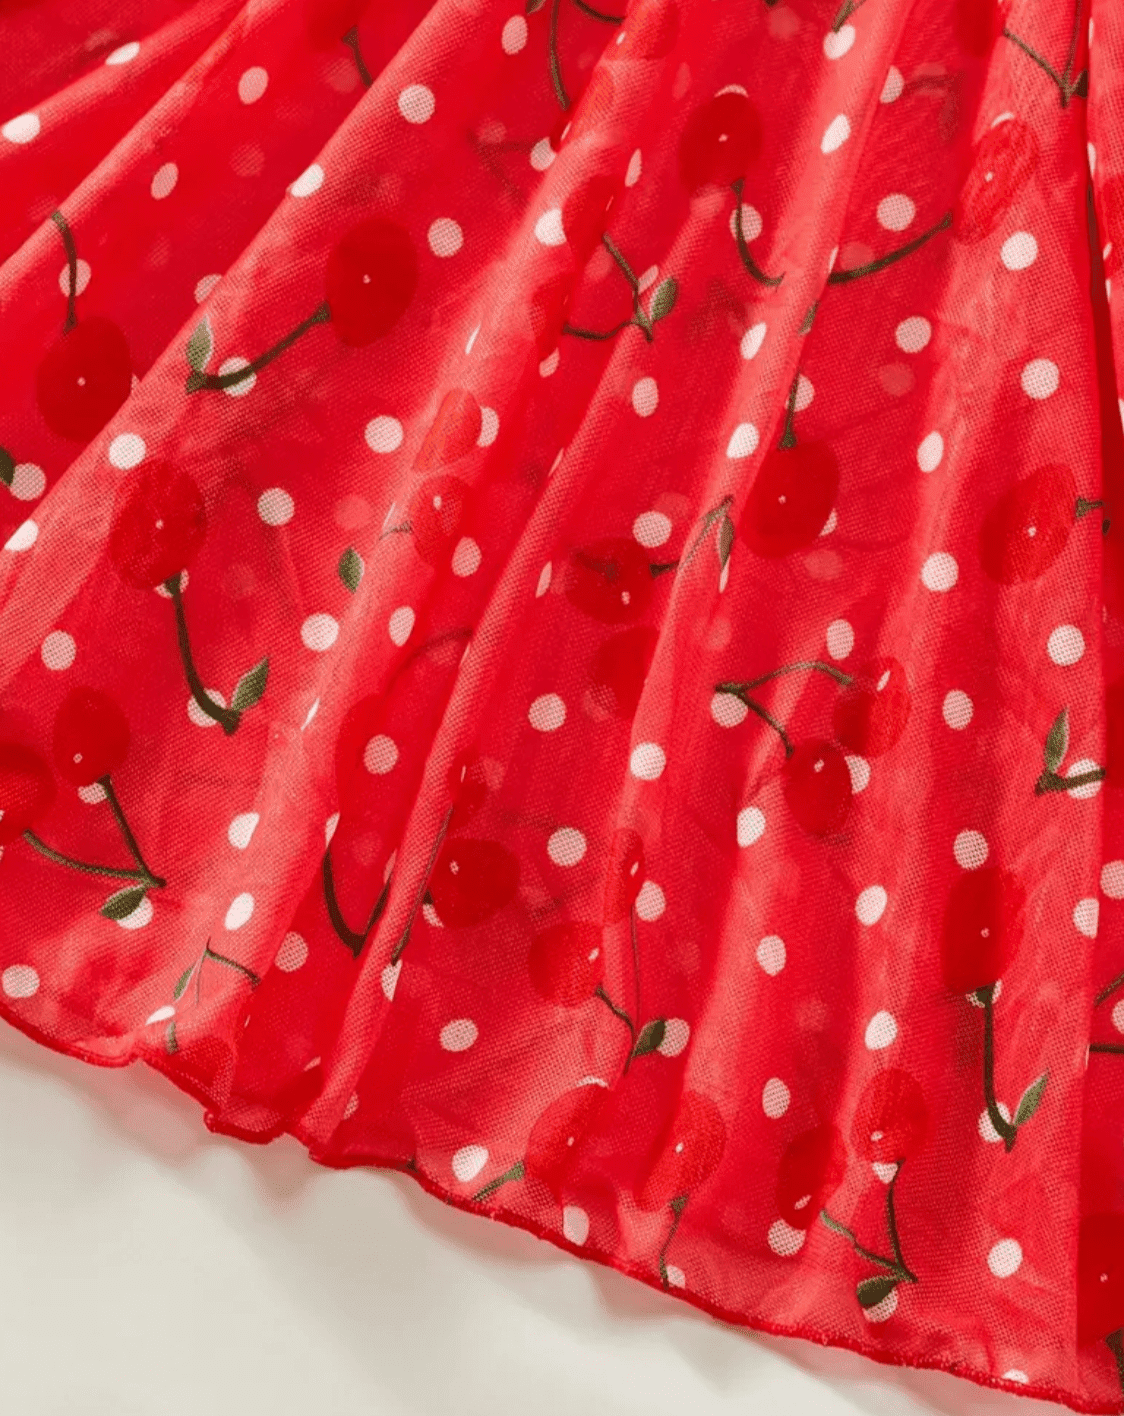 red lace slip dress lingerie